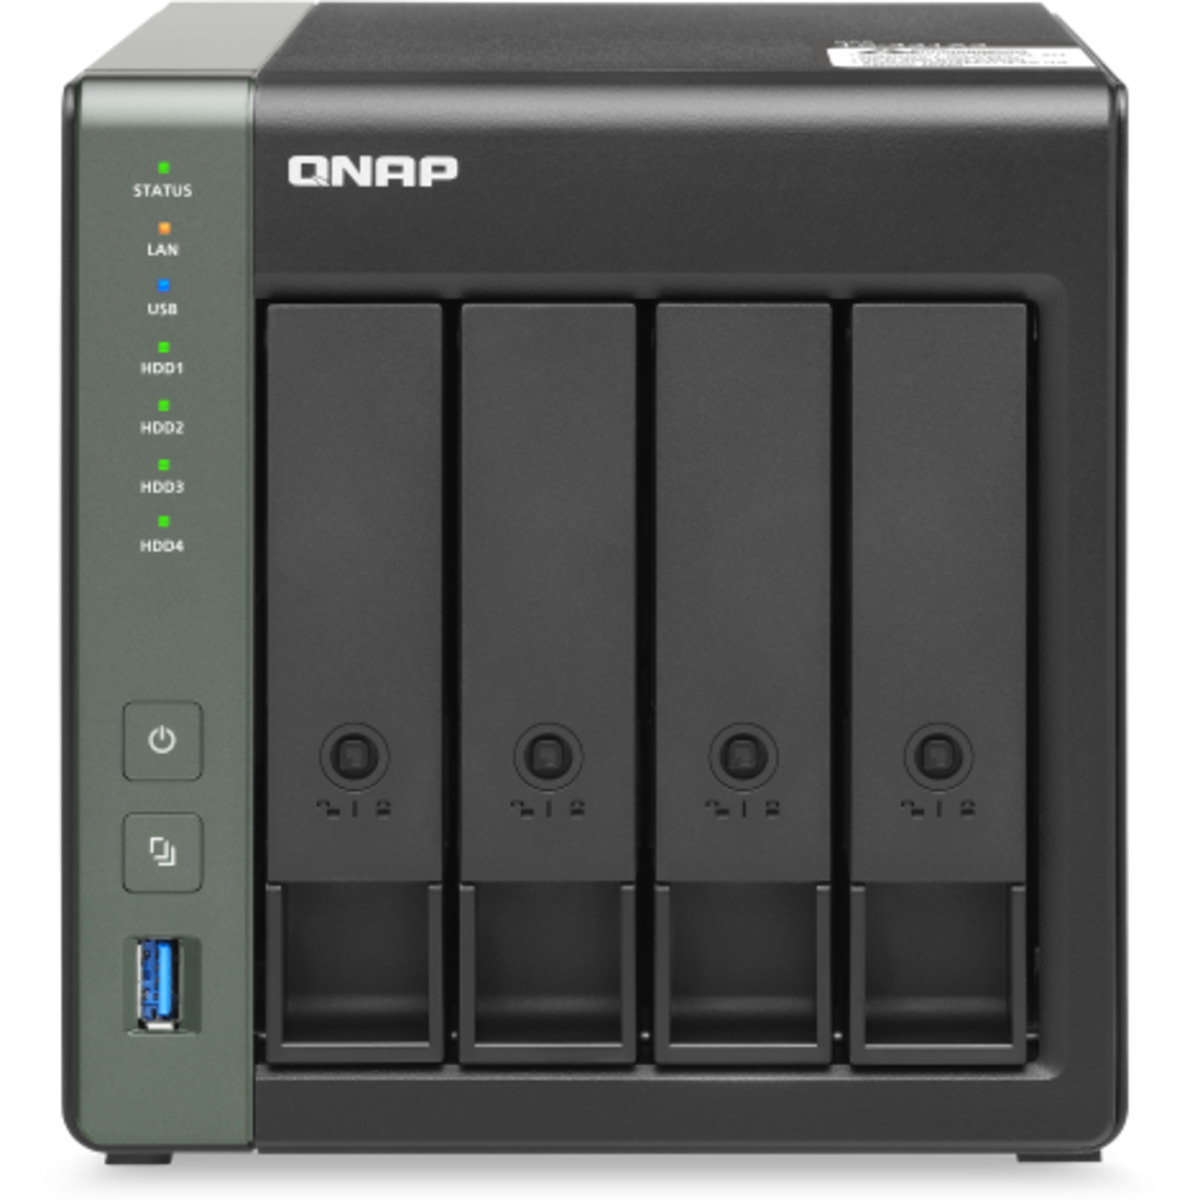 QNAP TS-431X3 72tb 4-Bay Desktop Multimedia / Power User / Business NAS - Network Attached Storage Device 4x18tb Western Digital Gold WD181KRYZ 3.5 7200rpm SATA 6Gb/s HDD ENTERPRISE Class Drives Installed - Burn-In Tested - FREE RAM UPGRADE TS-431X3